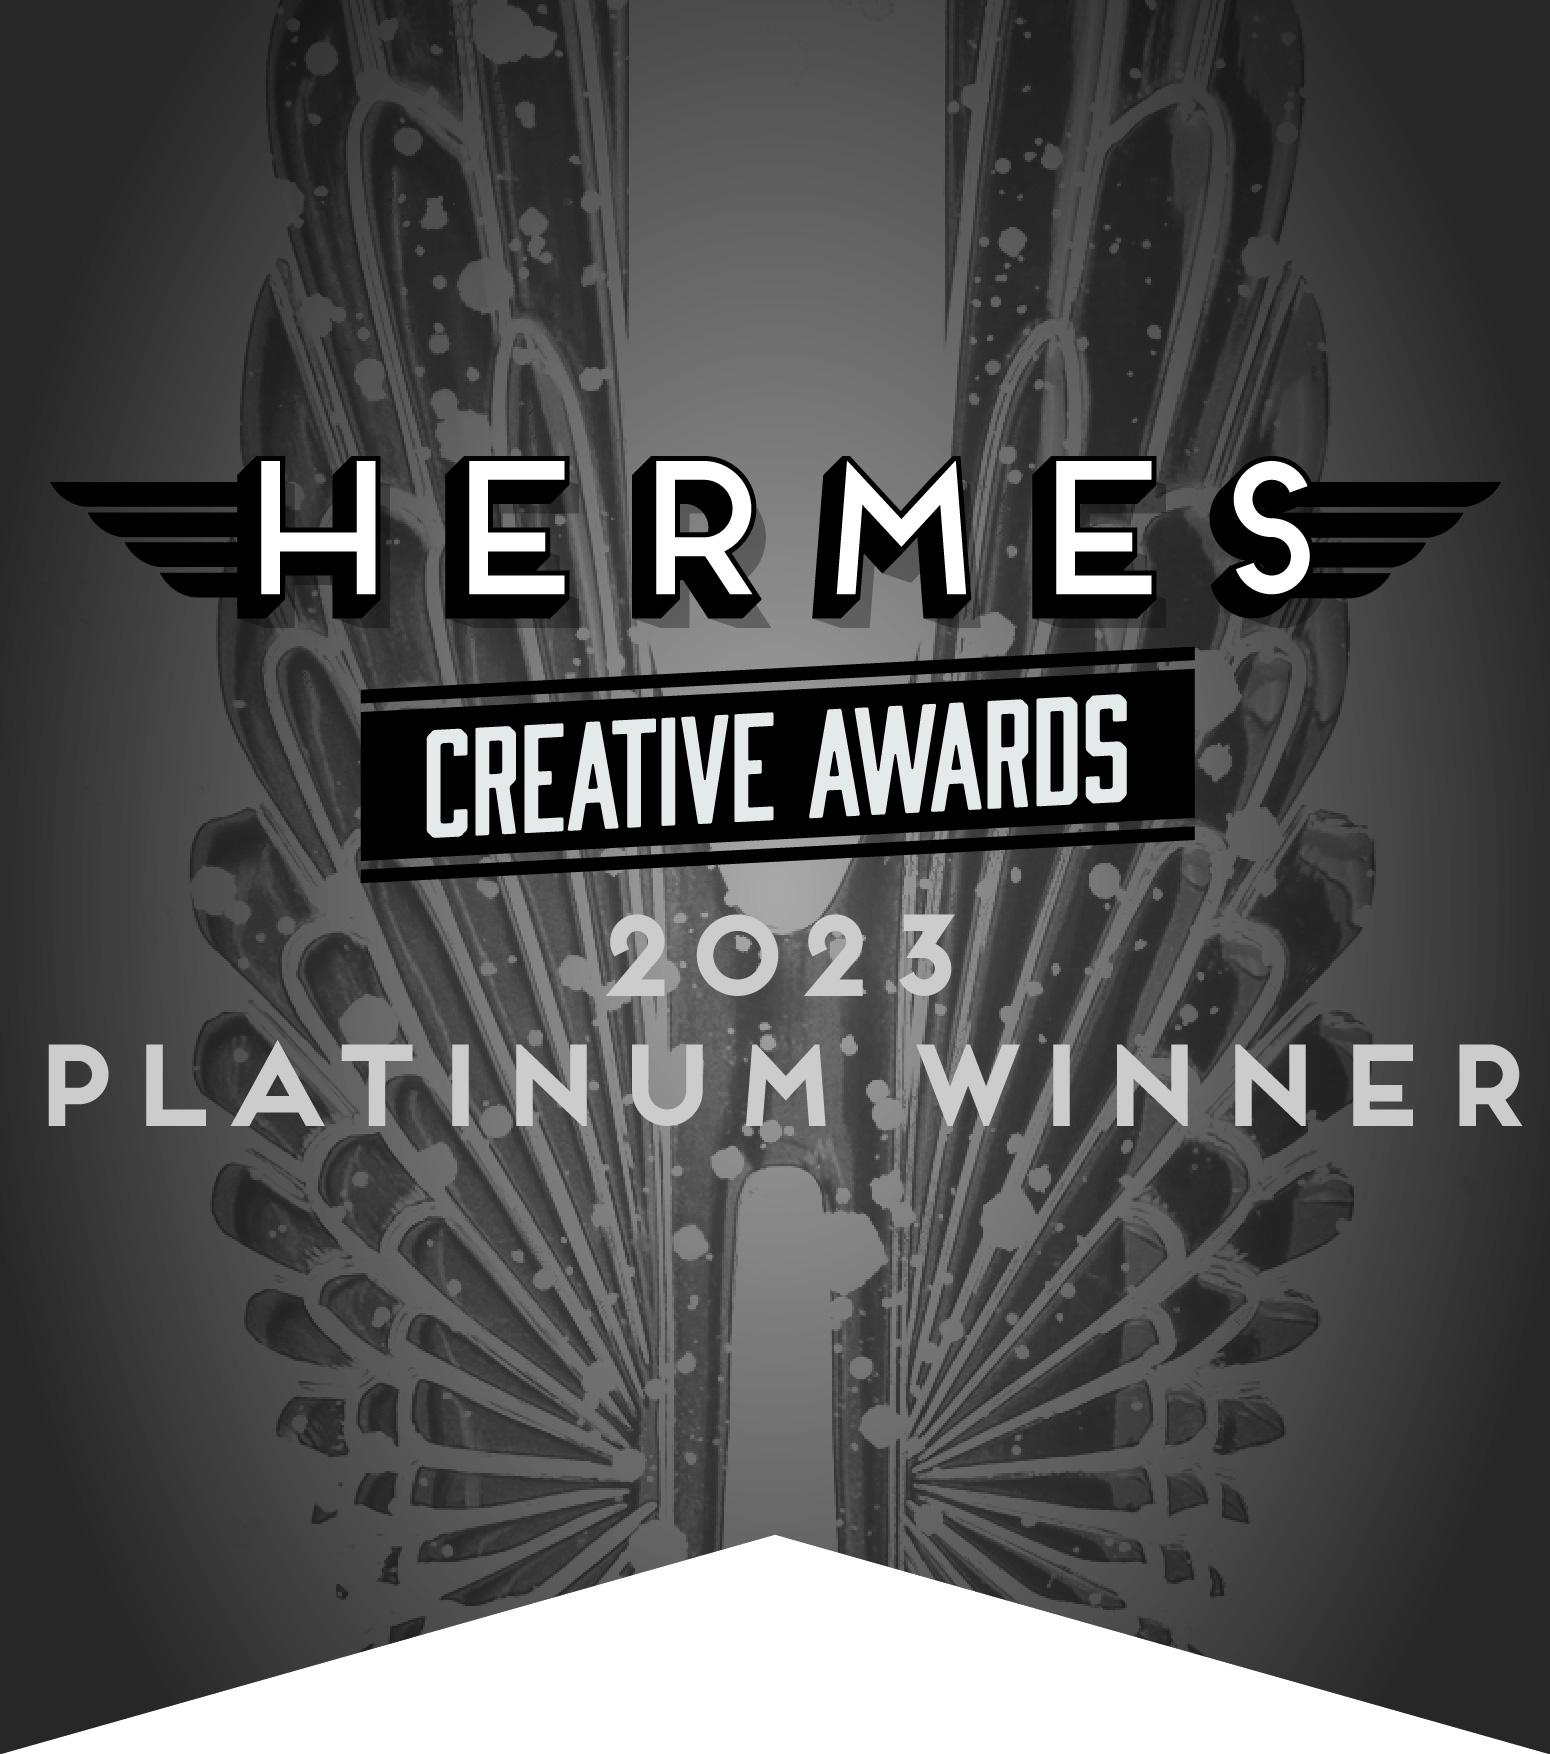 2023 Platinum Winner graphic